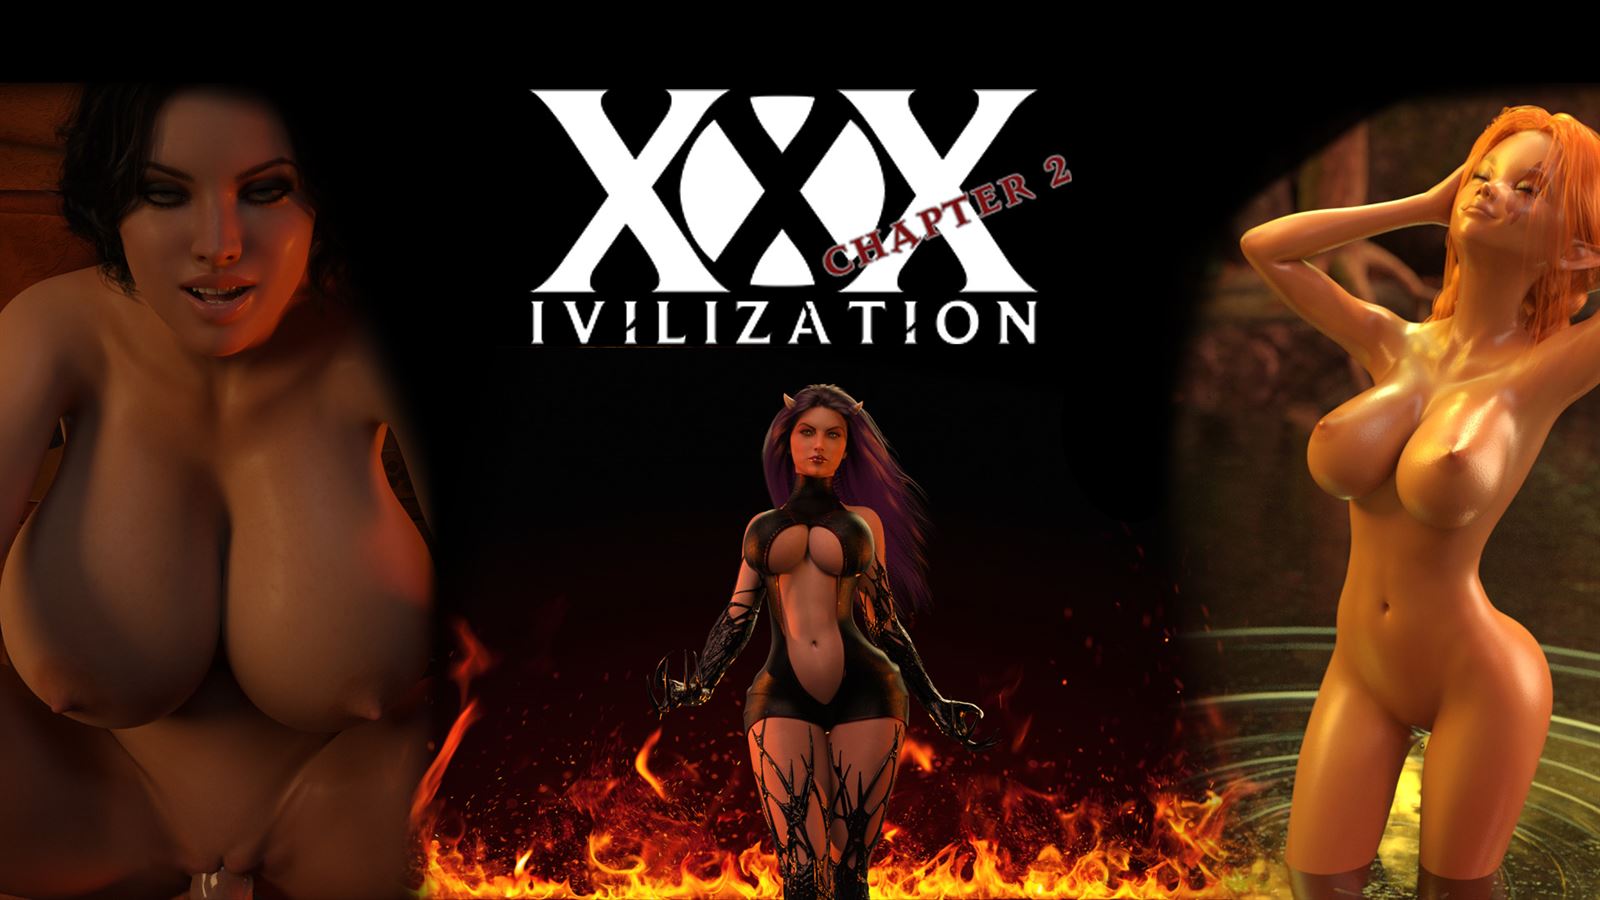 XXXivilization porn xxx game download cover